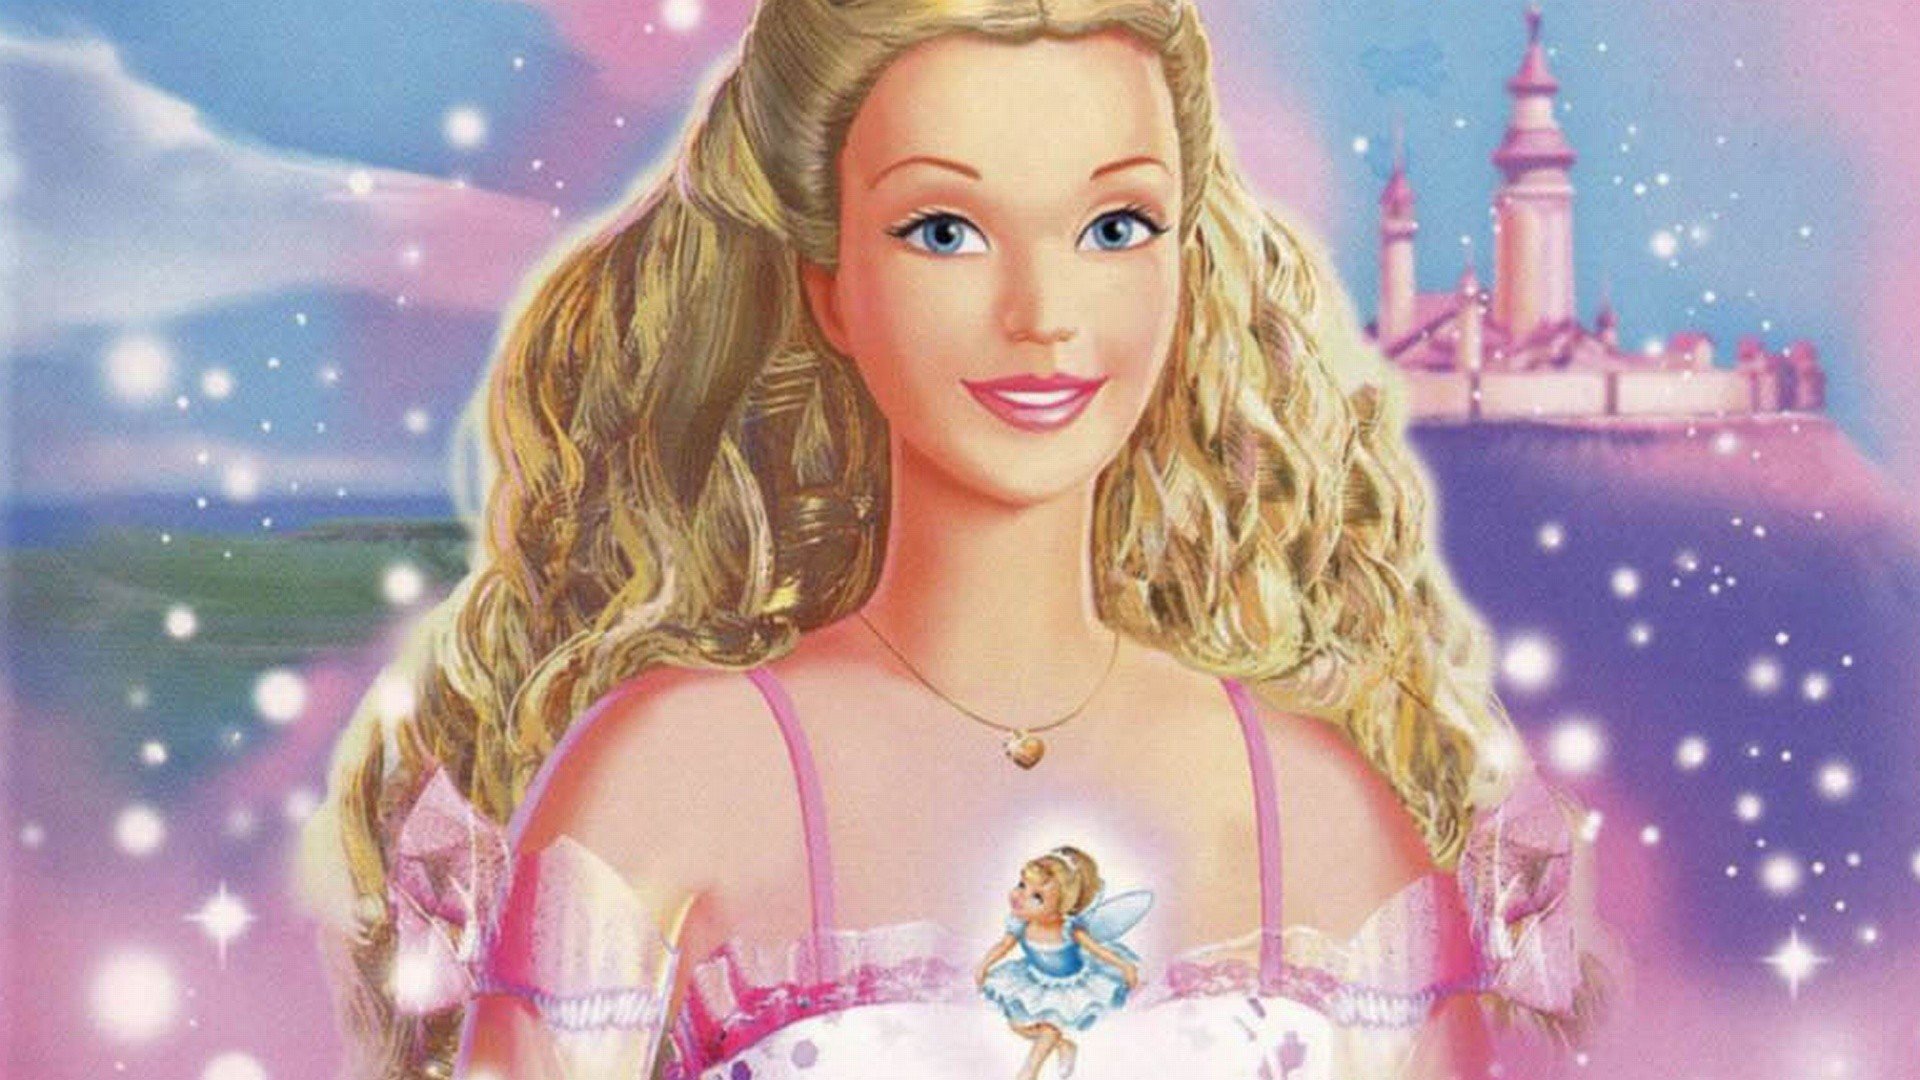 2001 Barbie In The Nutcracker